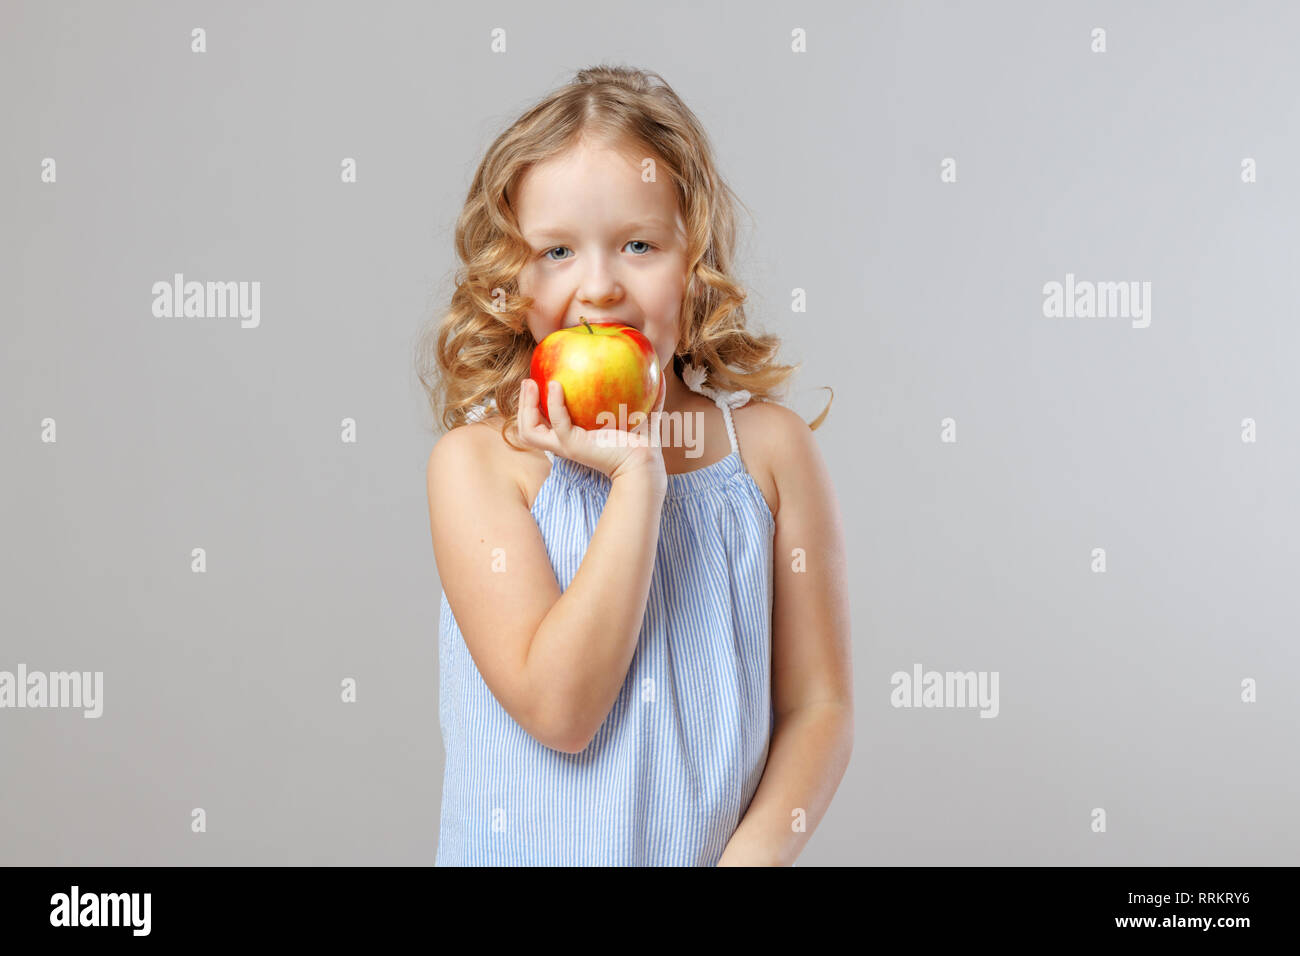 Adorable little girl child bites red apple. Gray background, studio, portrait Stock Photo